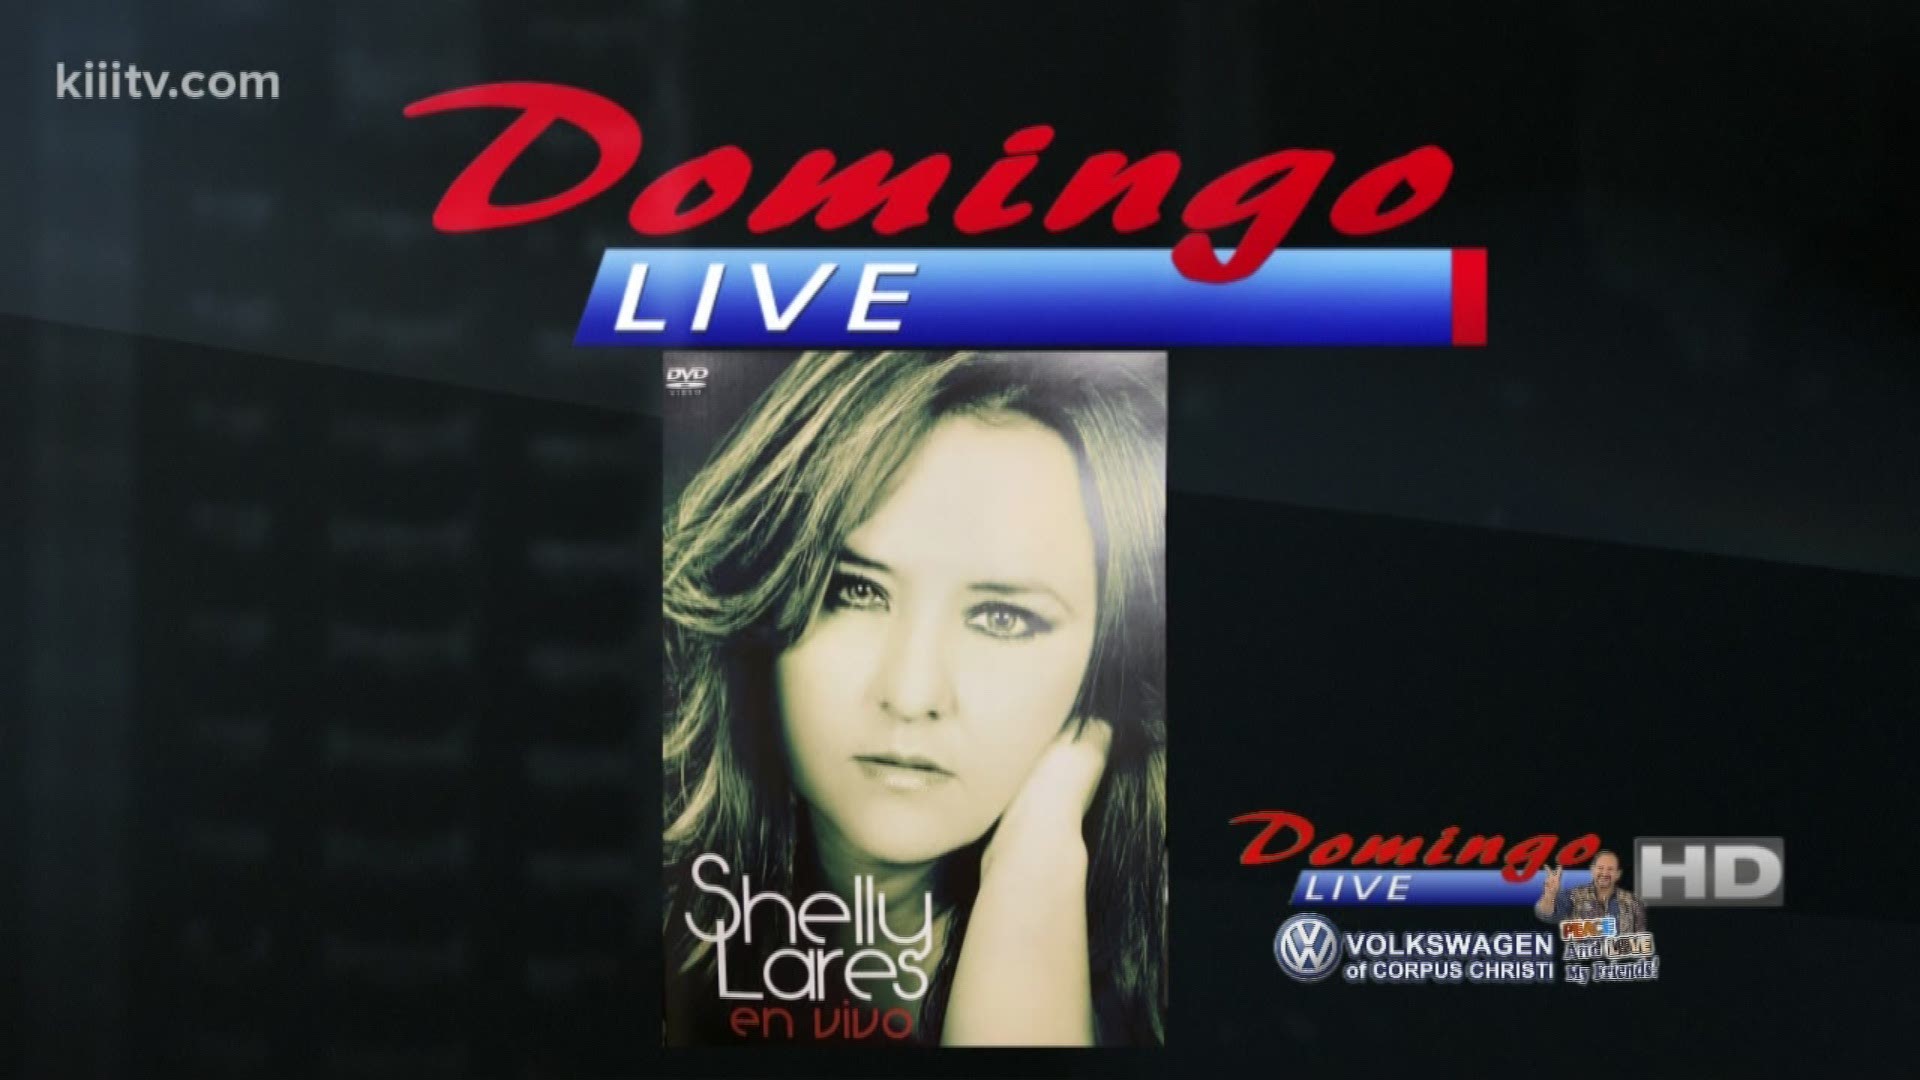 Shelly Lares "Tu Solo Tu" performance courtesy of Q-Productions, on Domingo Live.